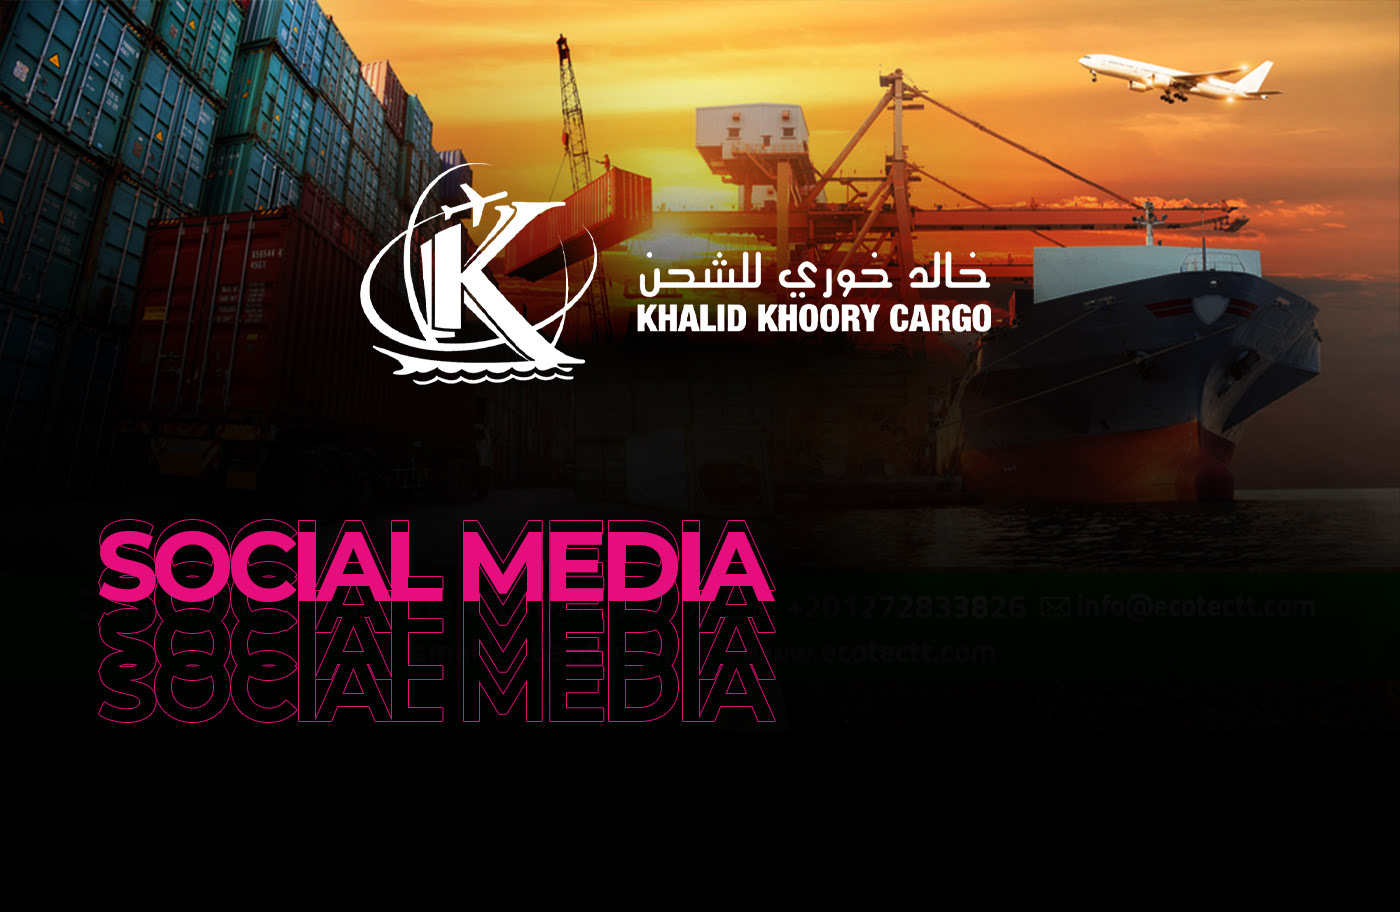 KHALED KHORY CARGO Social Media